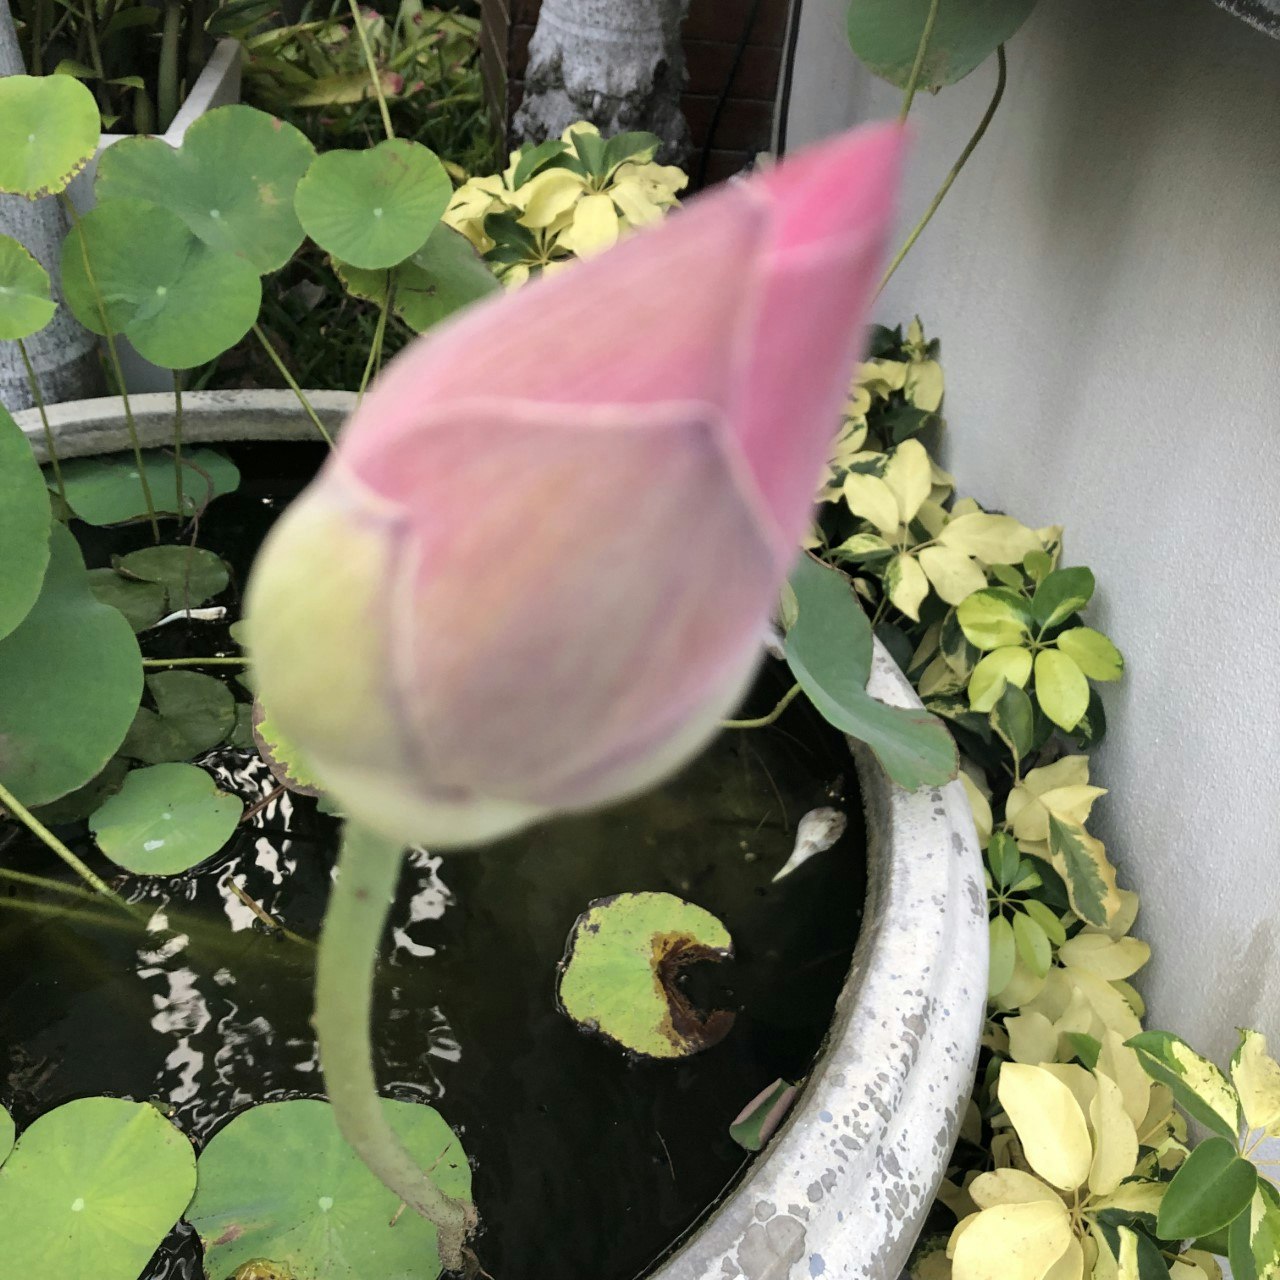 Helig indisk lotus, frön